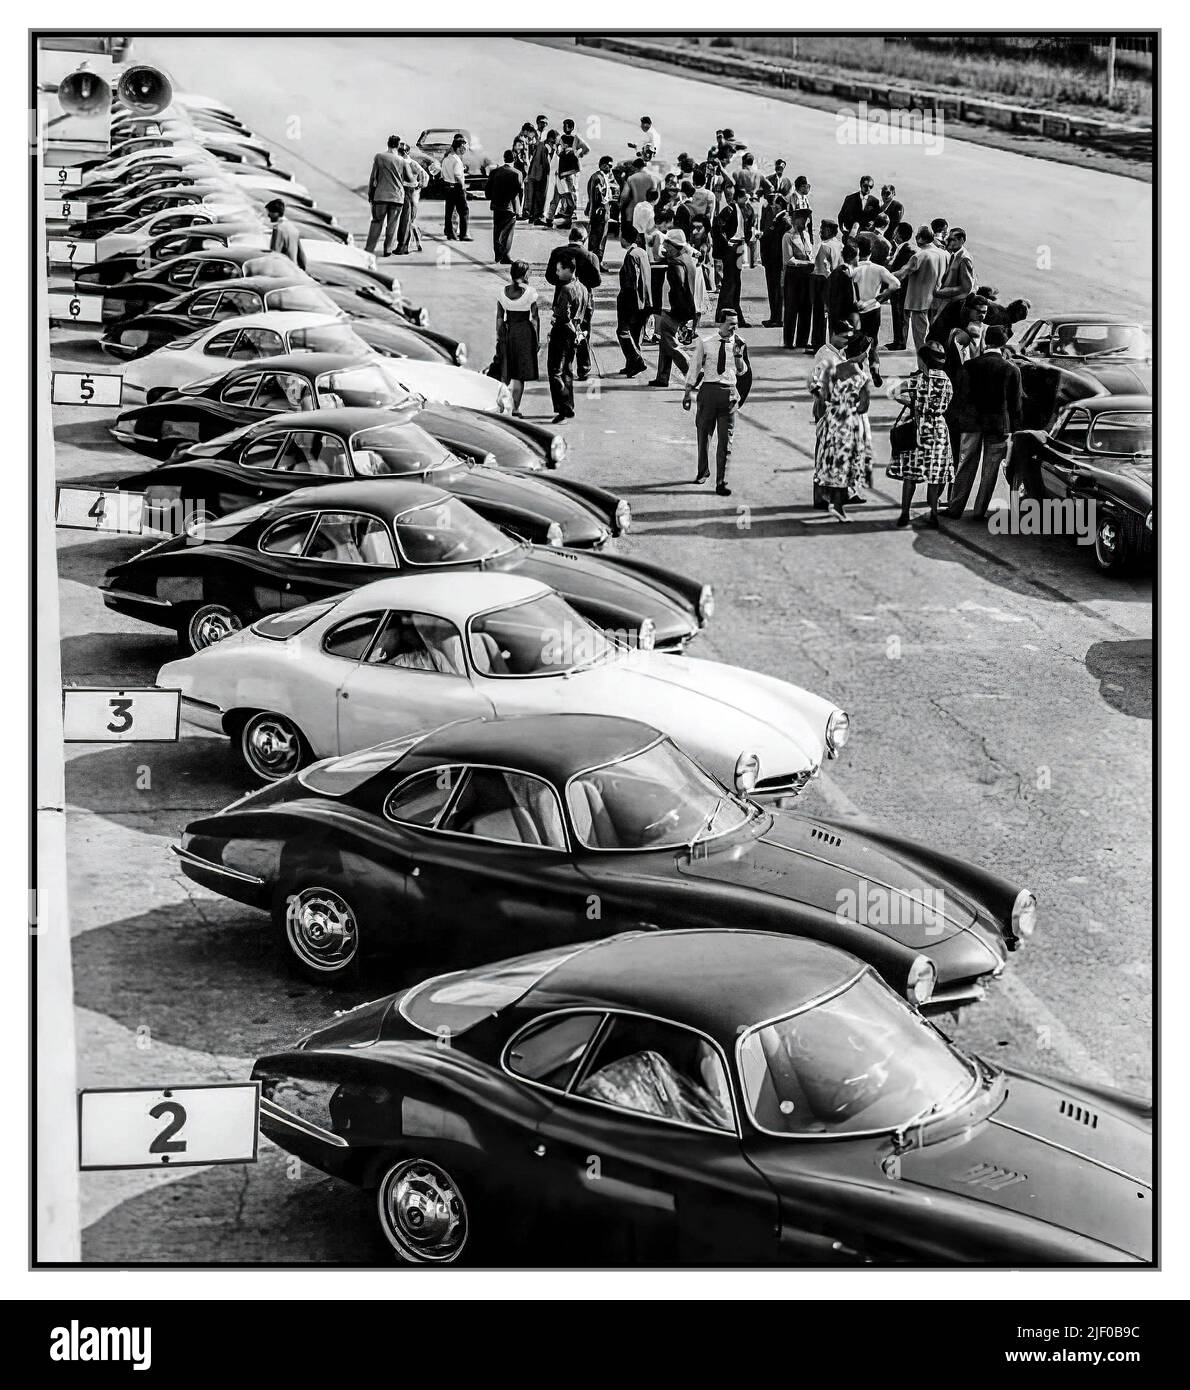 Alfa Romeo Giulietta SS launch new model at Monza Motor Racing Track  1959 Italy Stock Photo